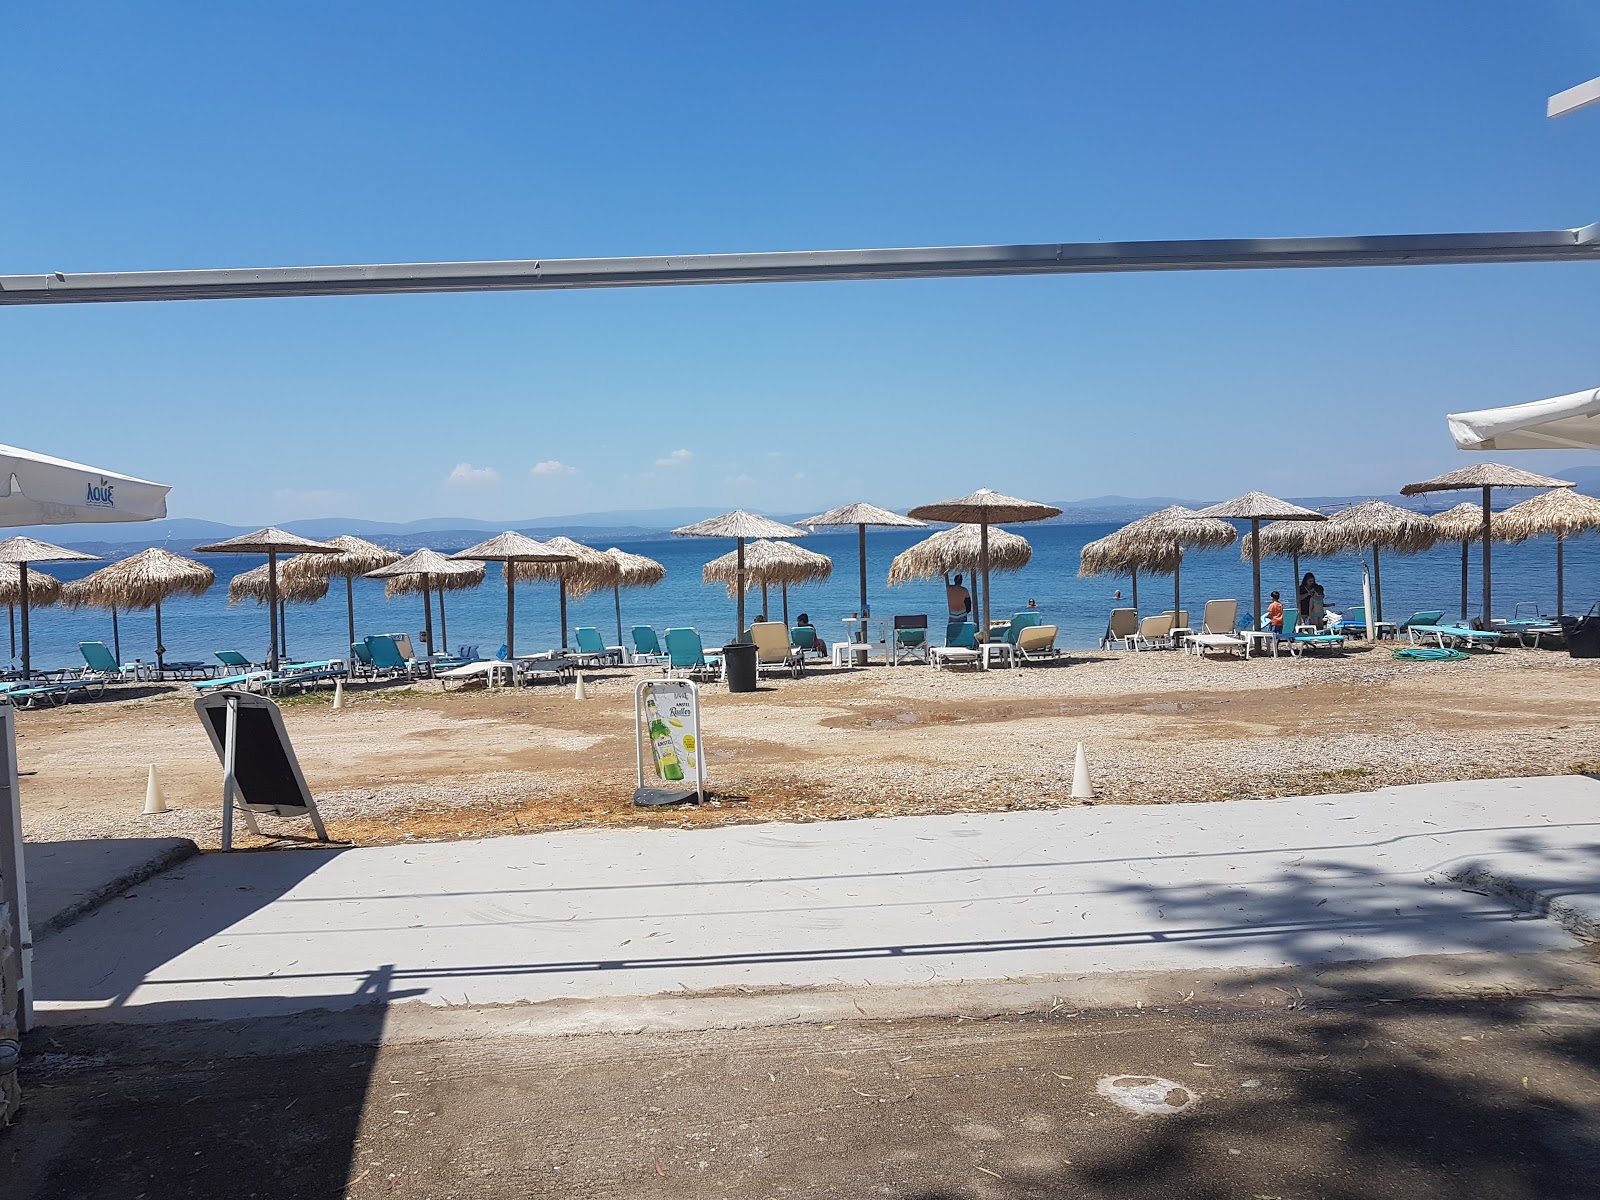 Fotografie cu Agios Andreas beach cu nivelul de curățenie in medie